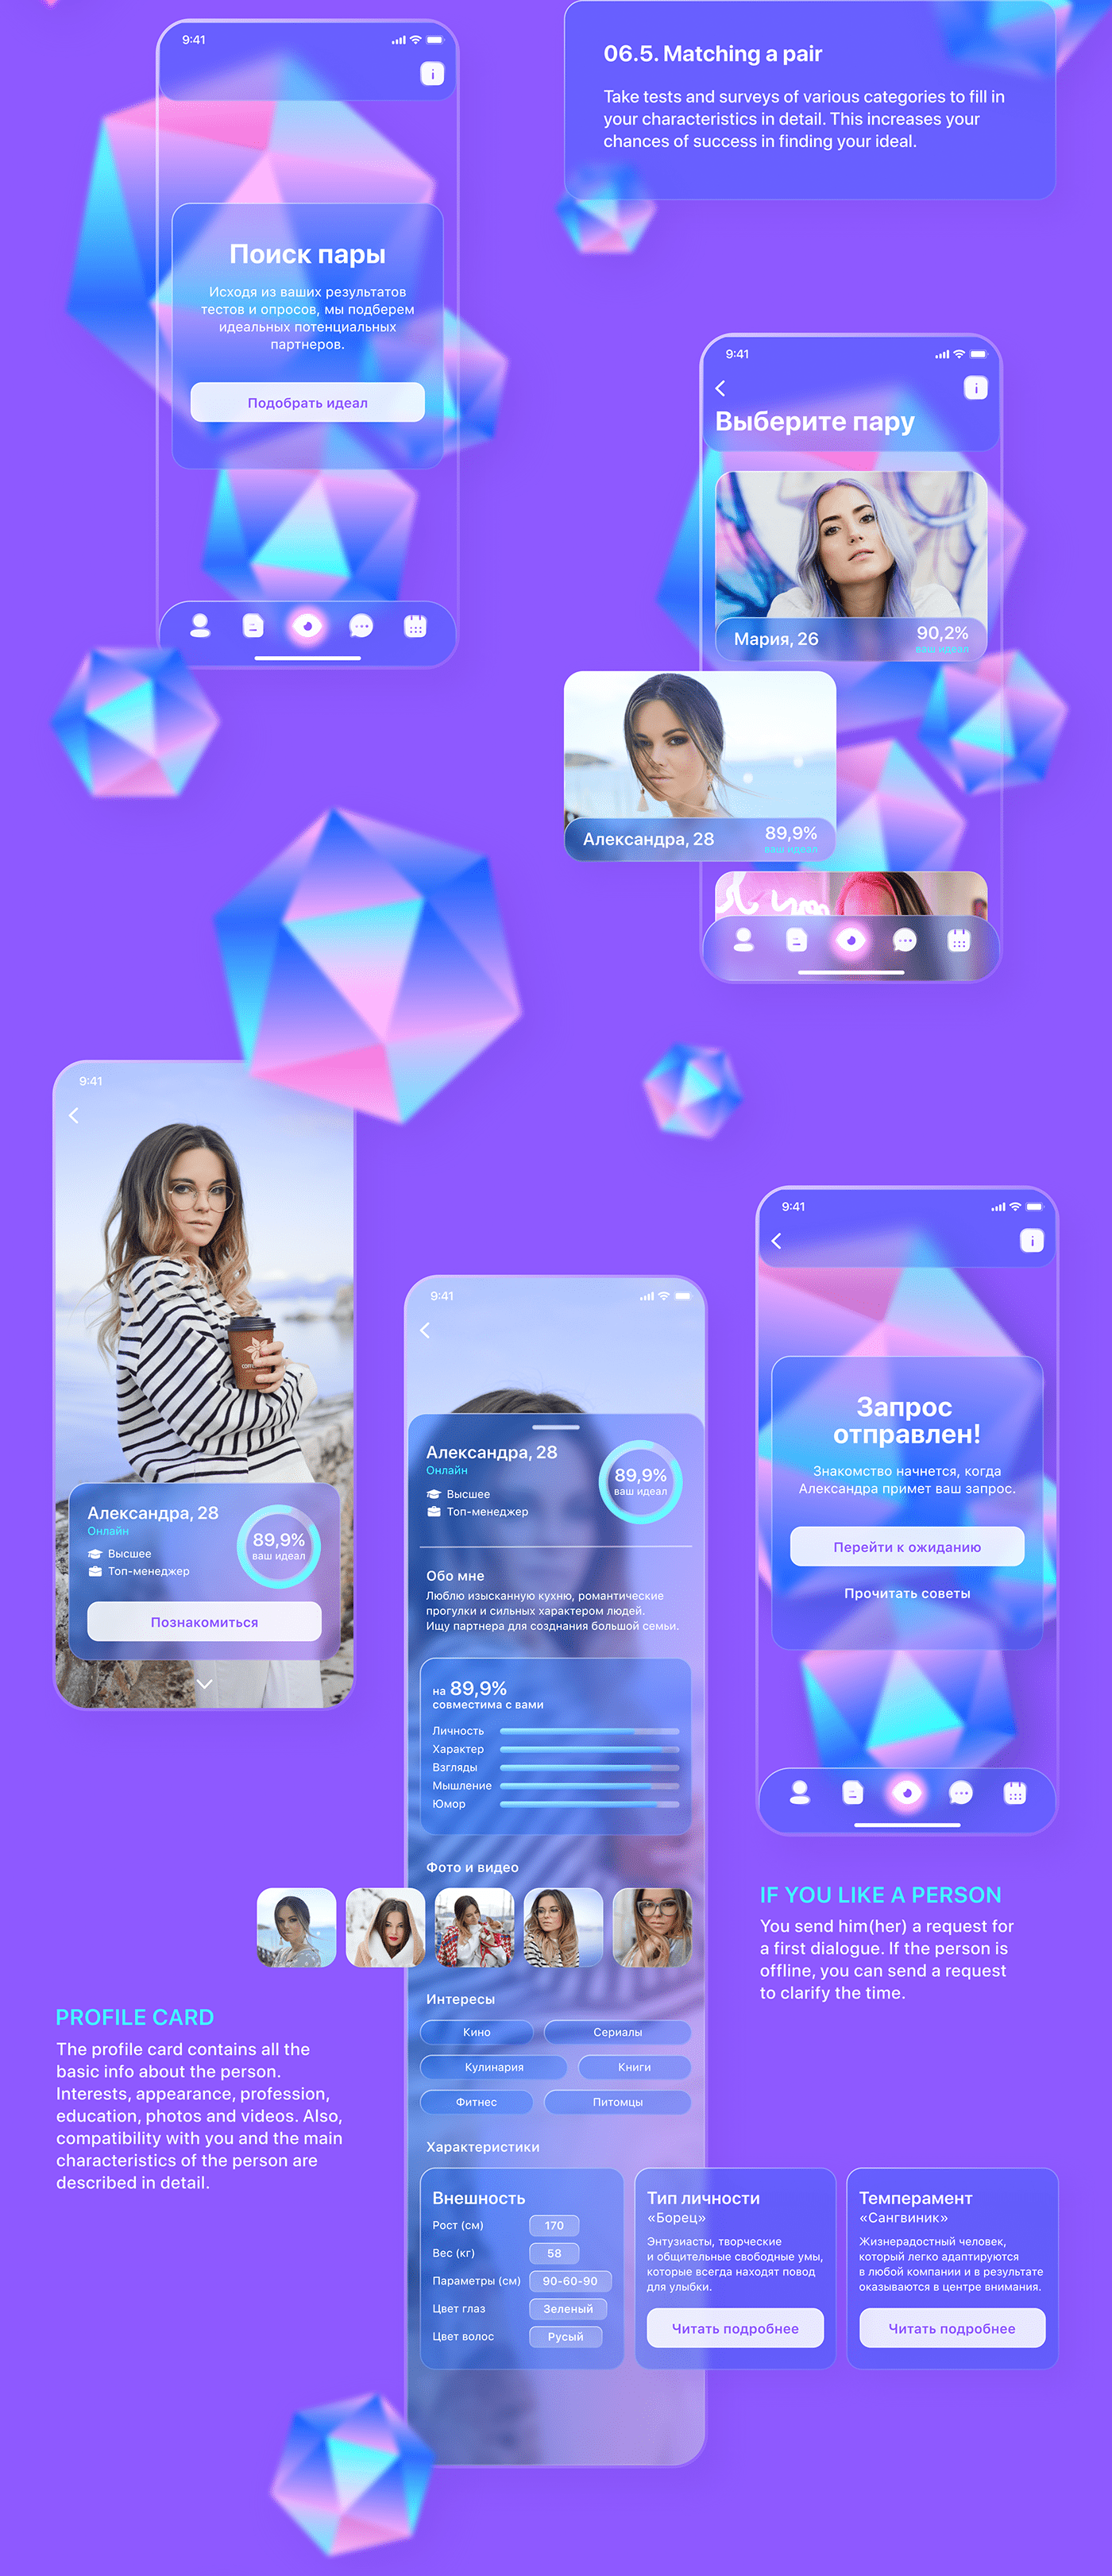 app concept dating app Dating Service glass glassmorphism match pair UI ux Web Design 